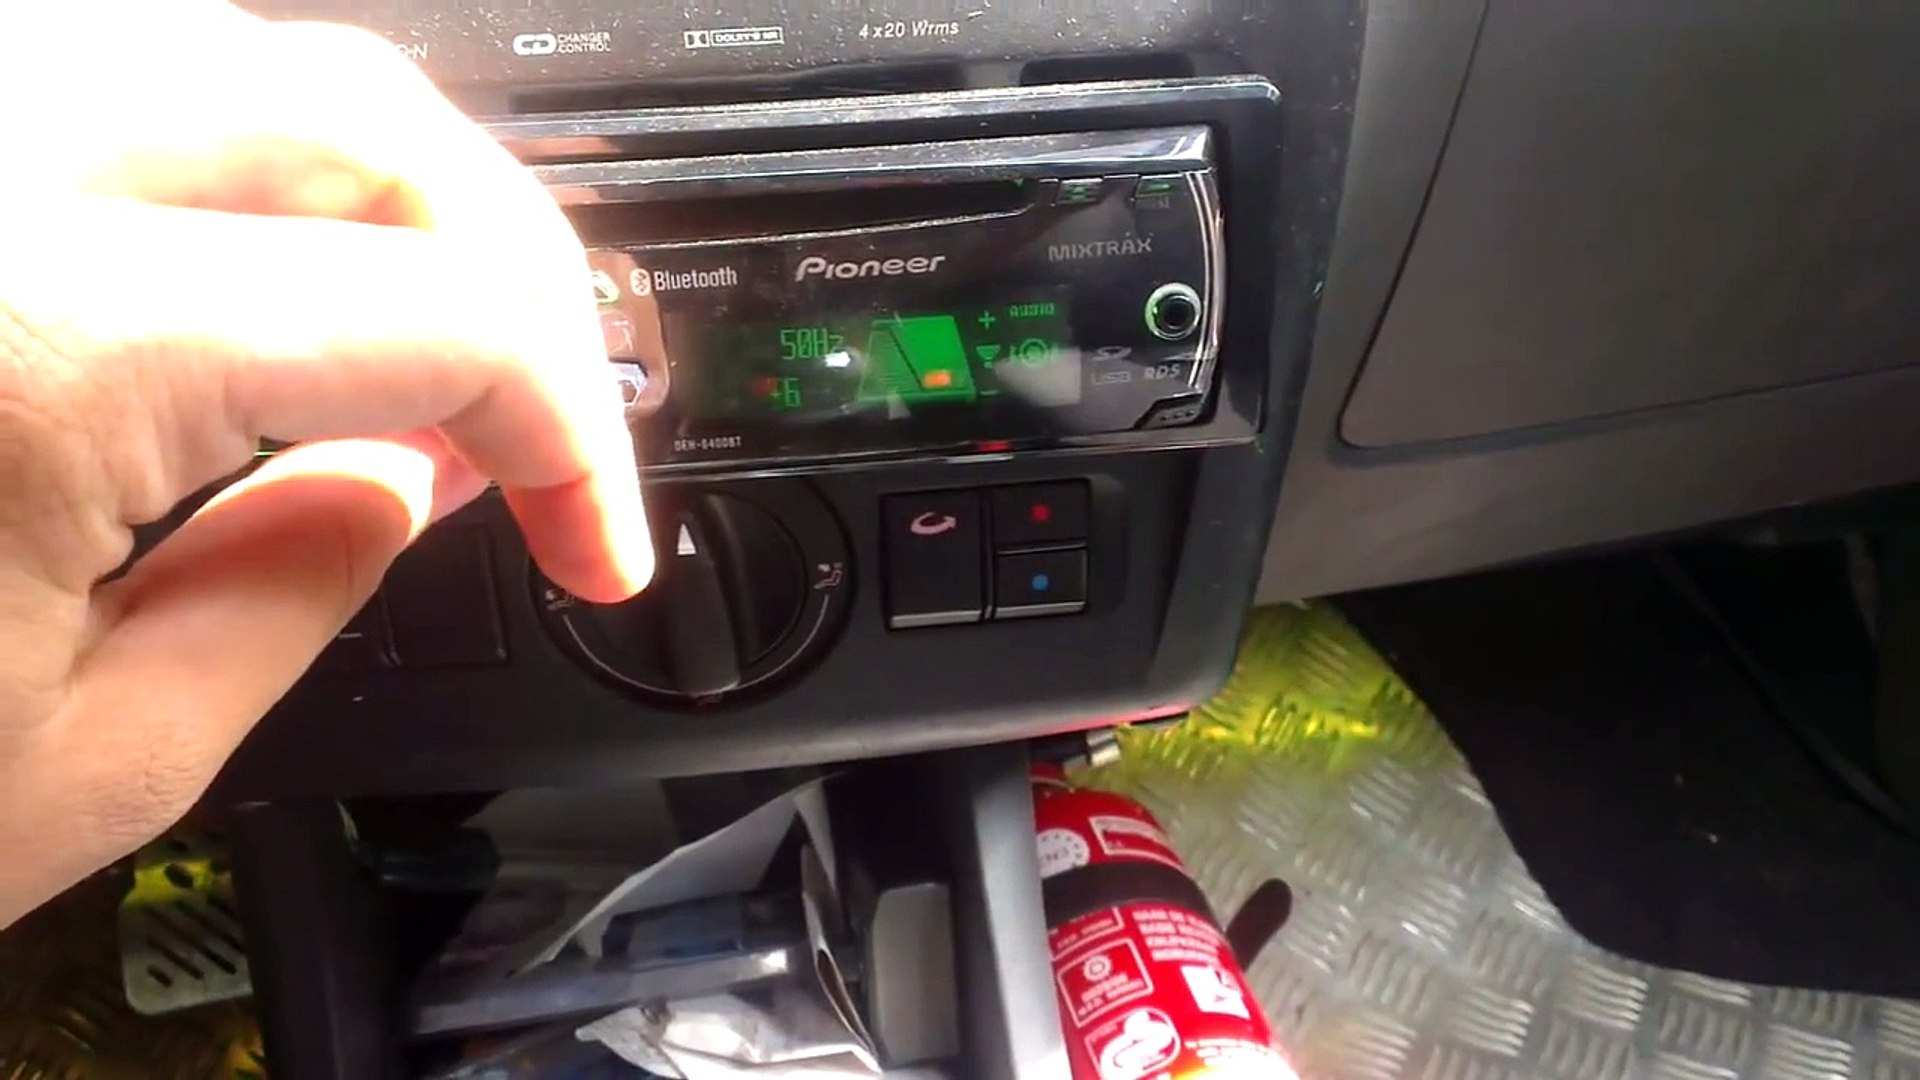 seat Ibiza 6k2 (III) custom 1 DIN radio - how to link - video Dailymotion